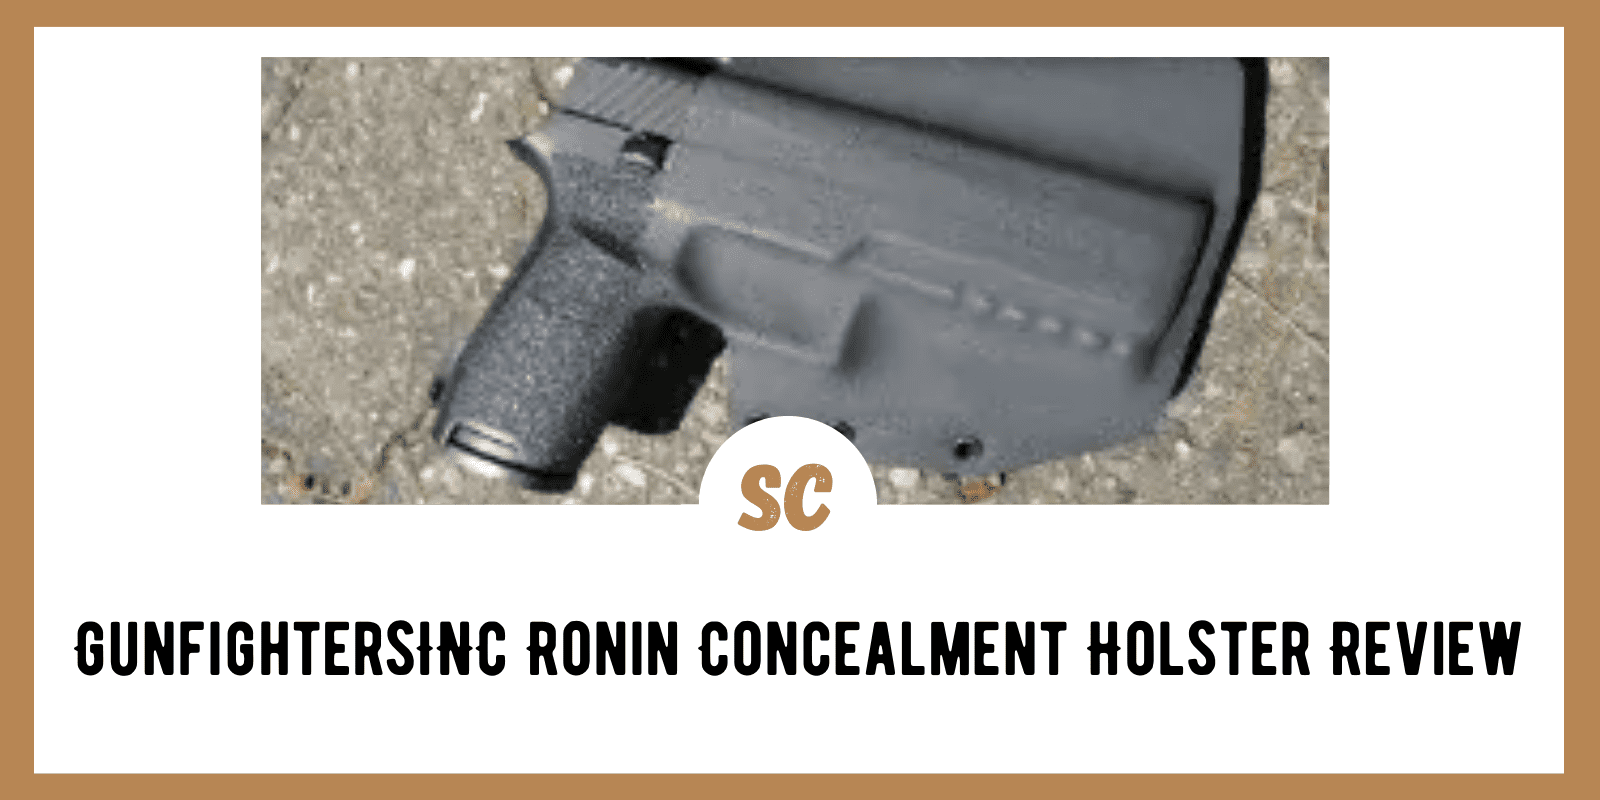 Survival Gear Review: GunfightersINC Ronin Concealment Holster